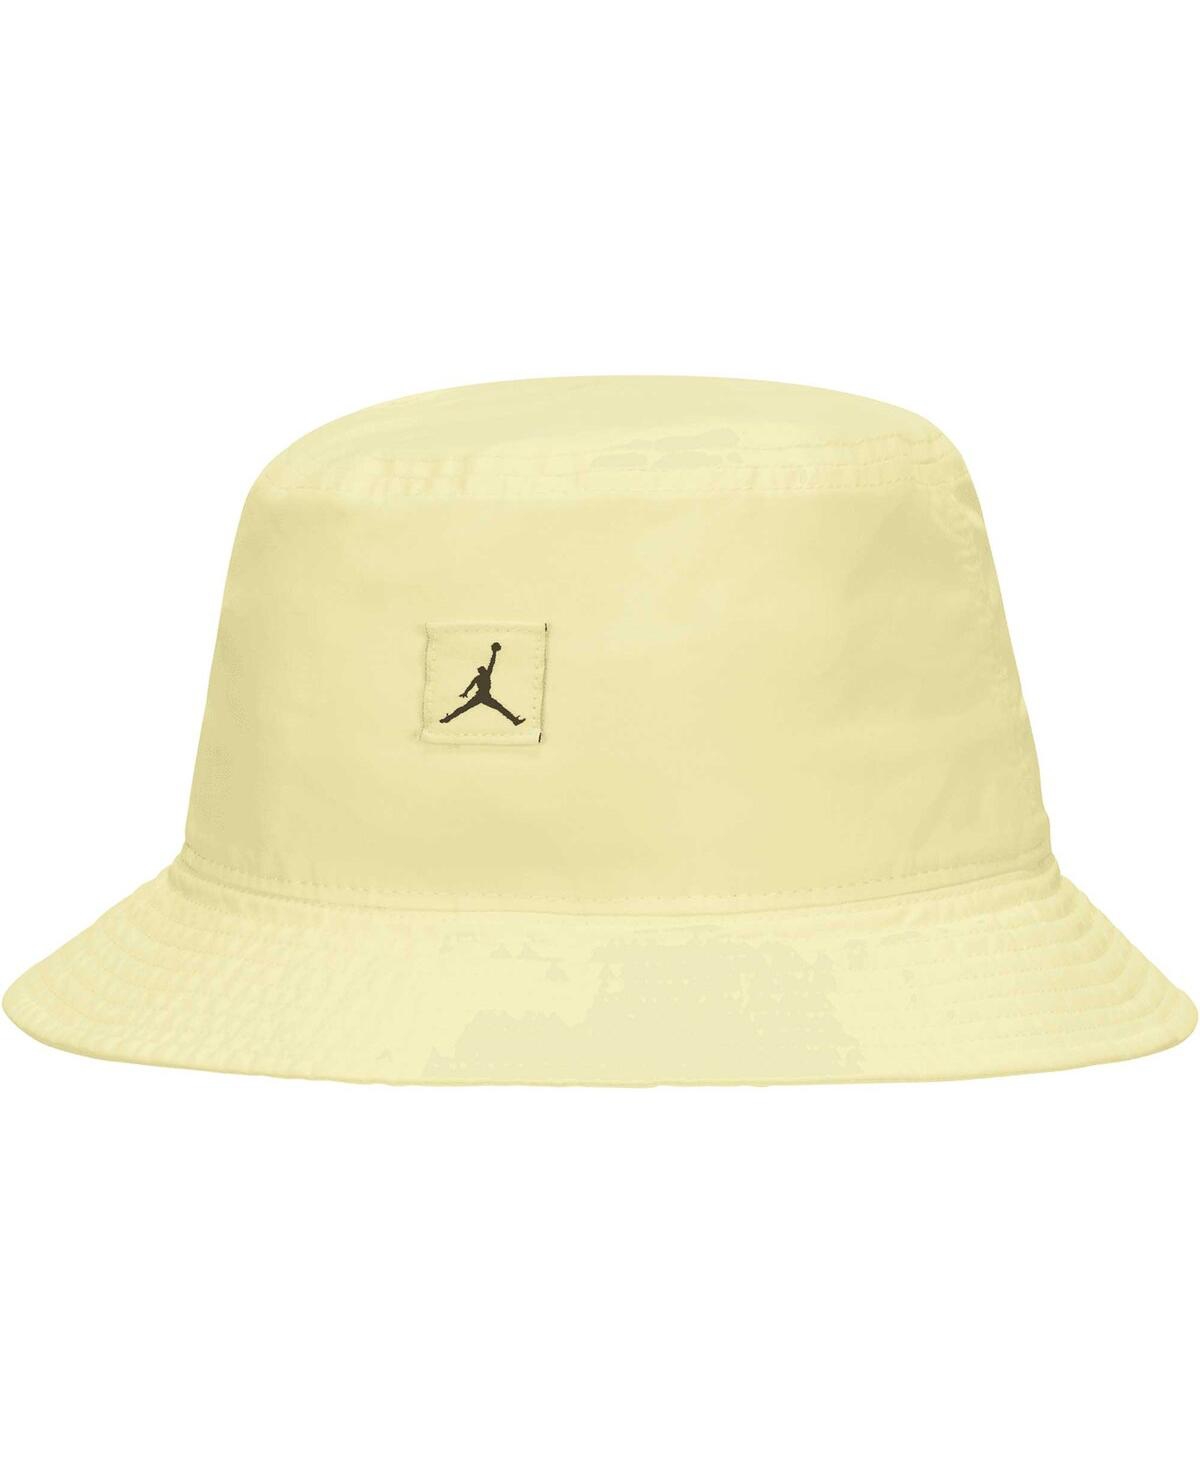 Men's Jordan YellowÂ Jumpman Washed Bucket Hat - Yellow